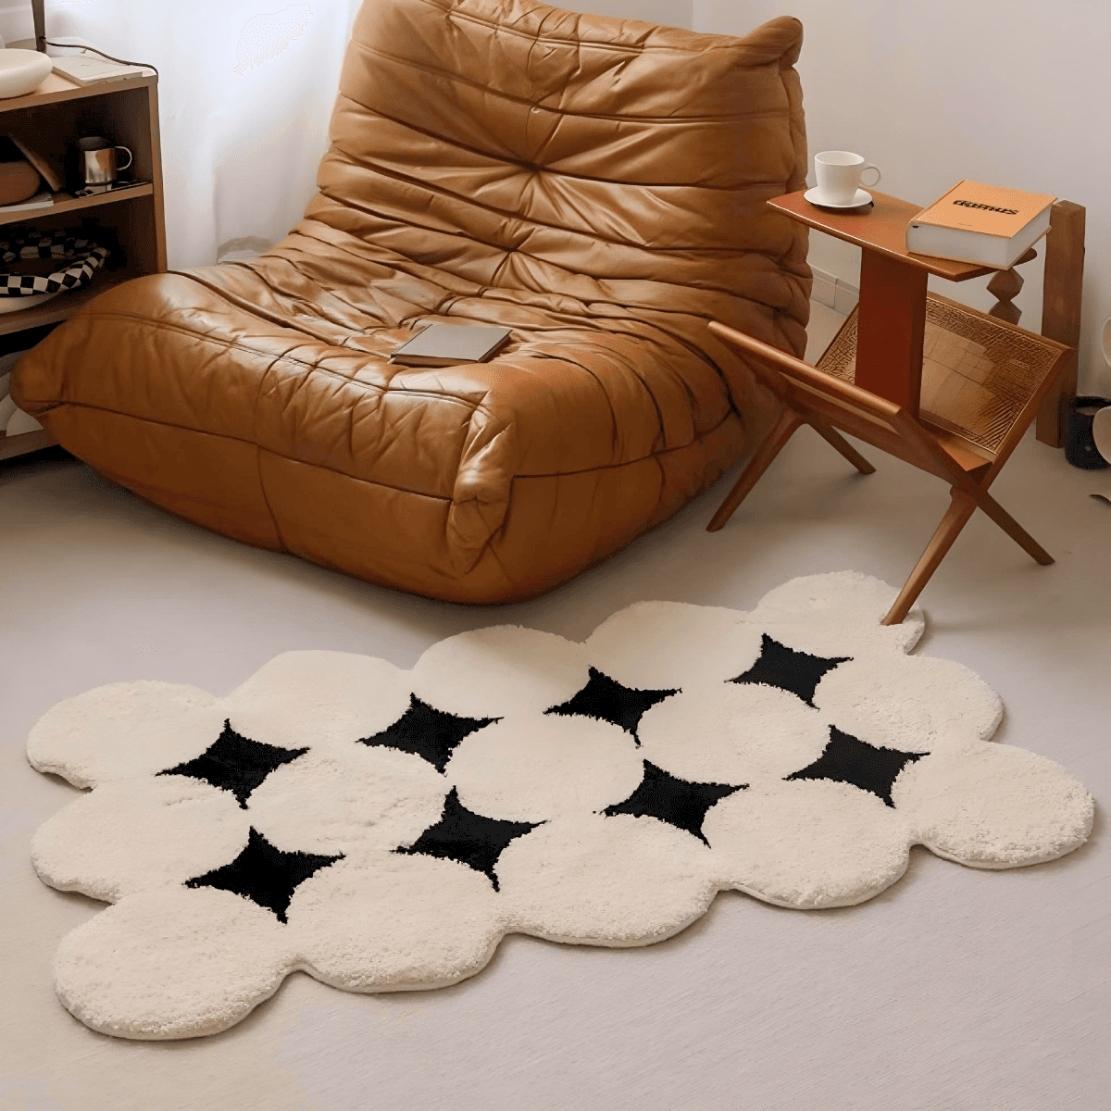 Nordic livingroom modern black white geometric dot floor rug with brown leather chair